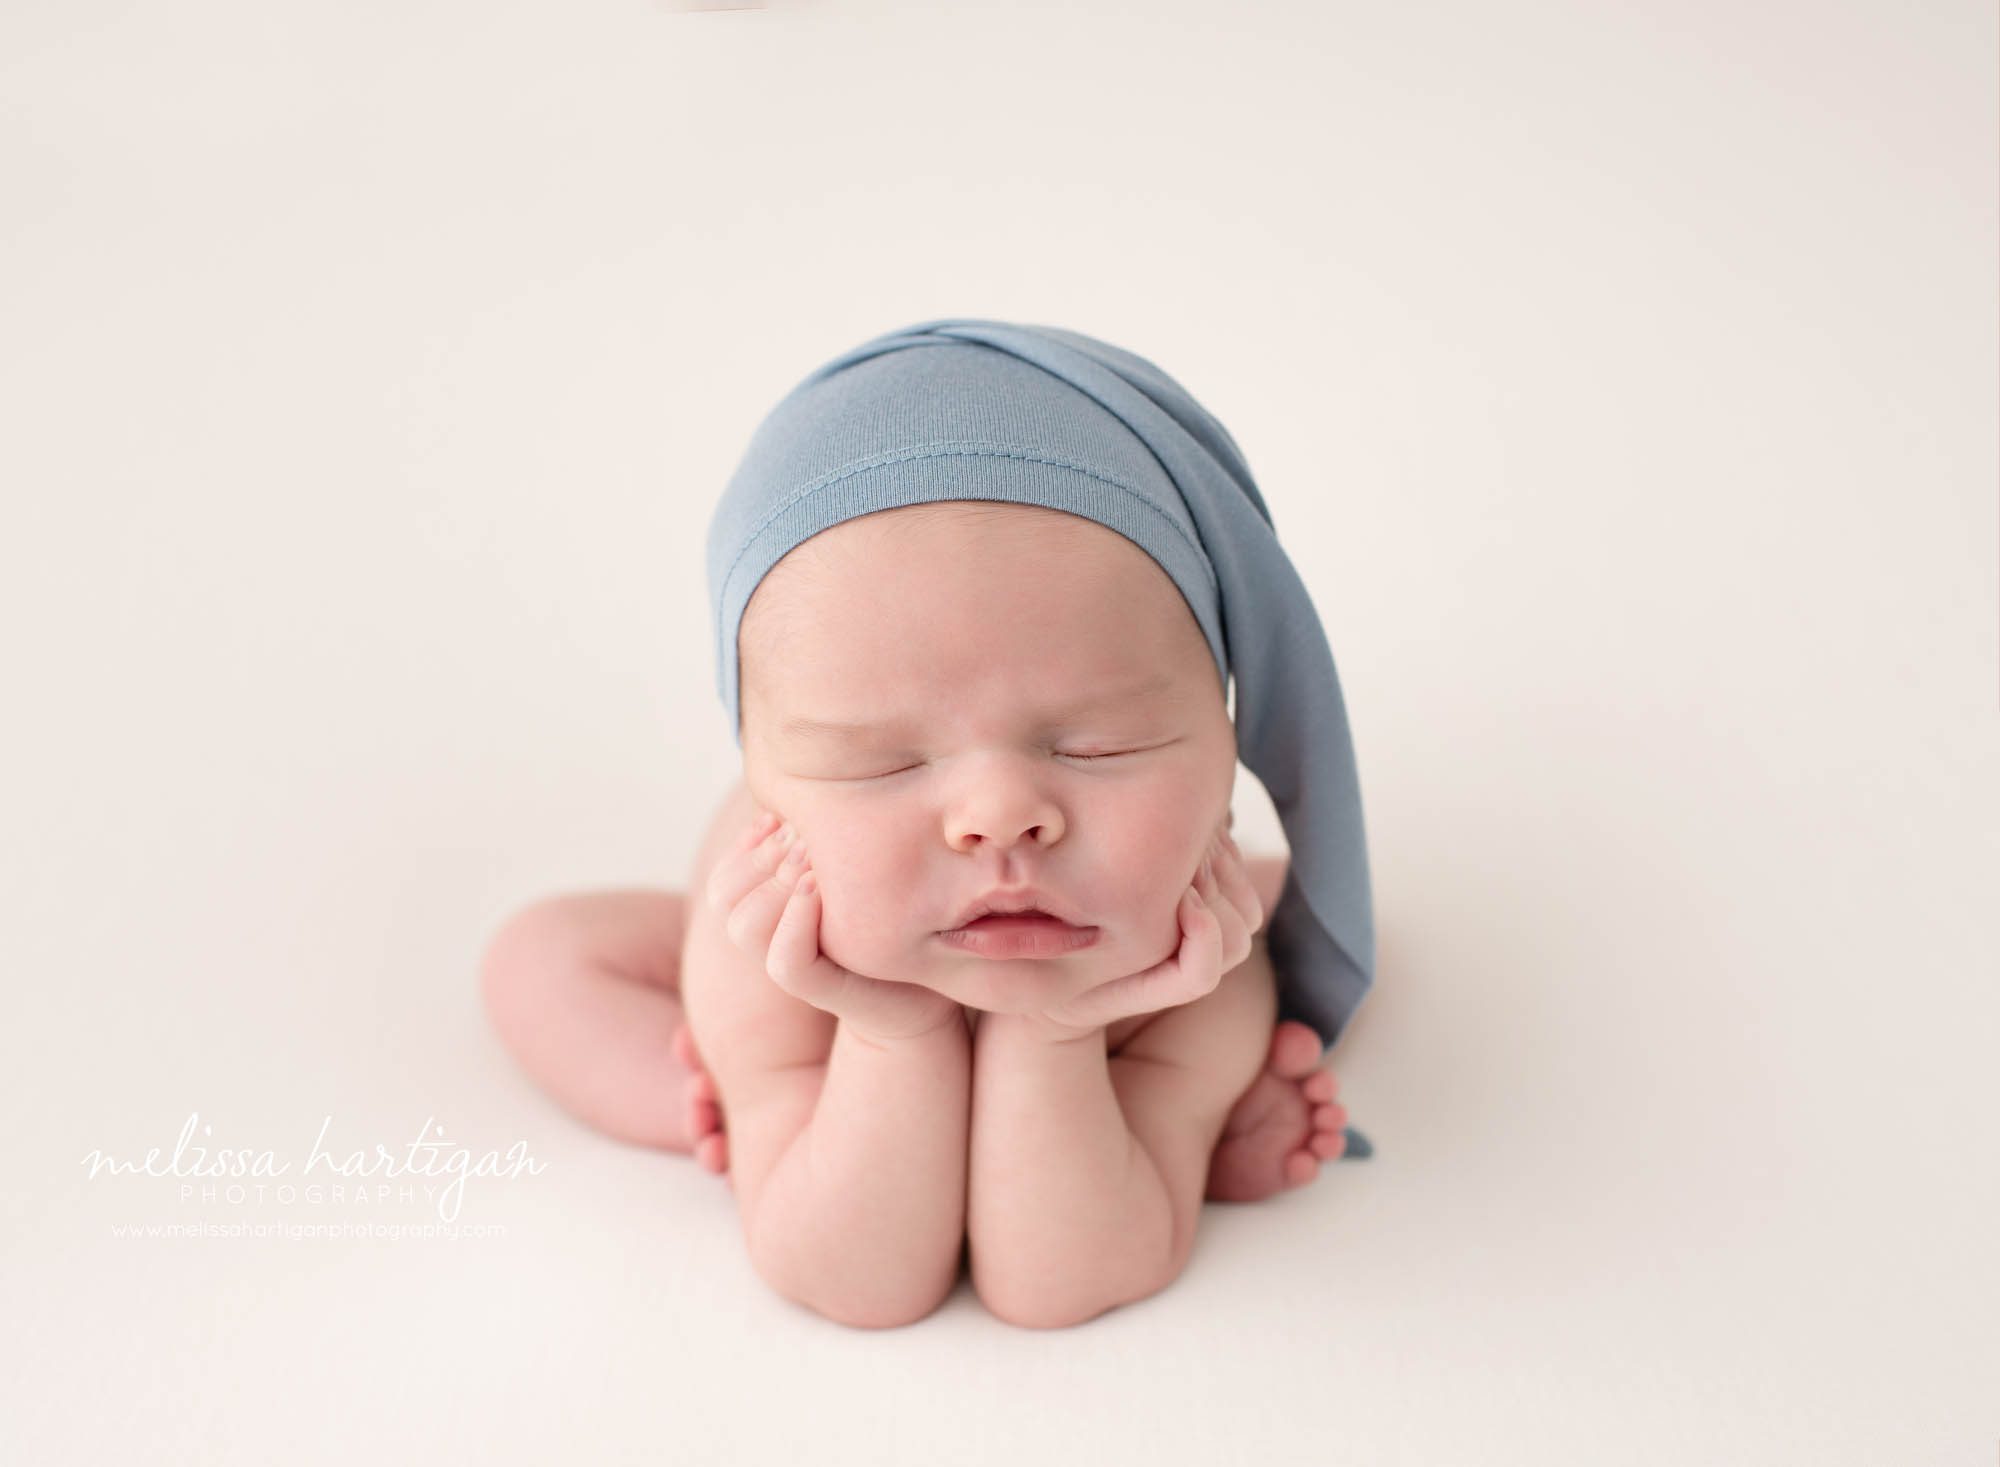 newborn baby boy posed froggy pose wearing blue sleepy cap